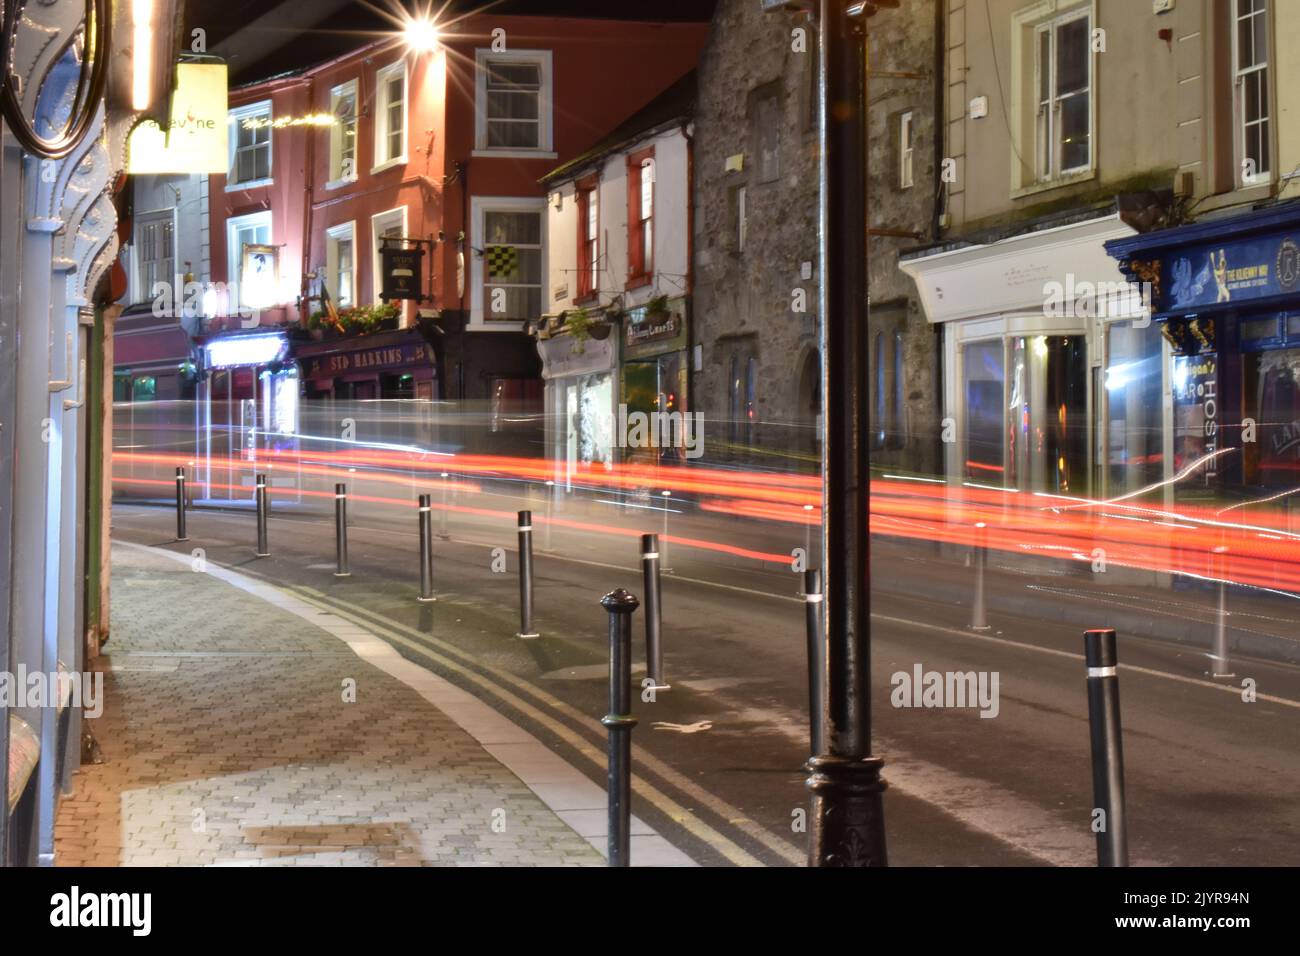 Car light trails, Kilkenny, Ireland Stock Photo